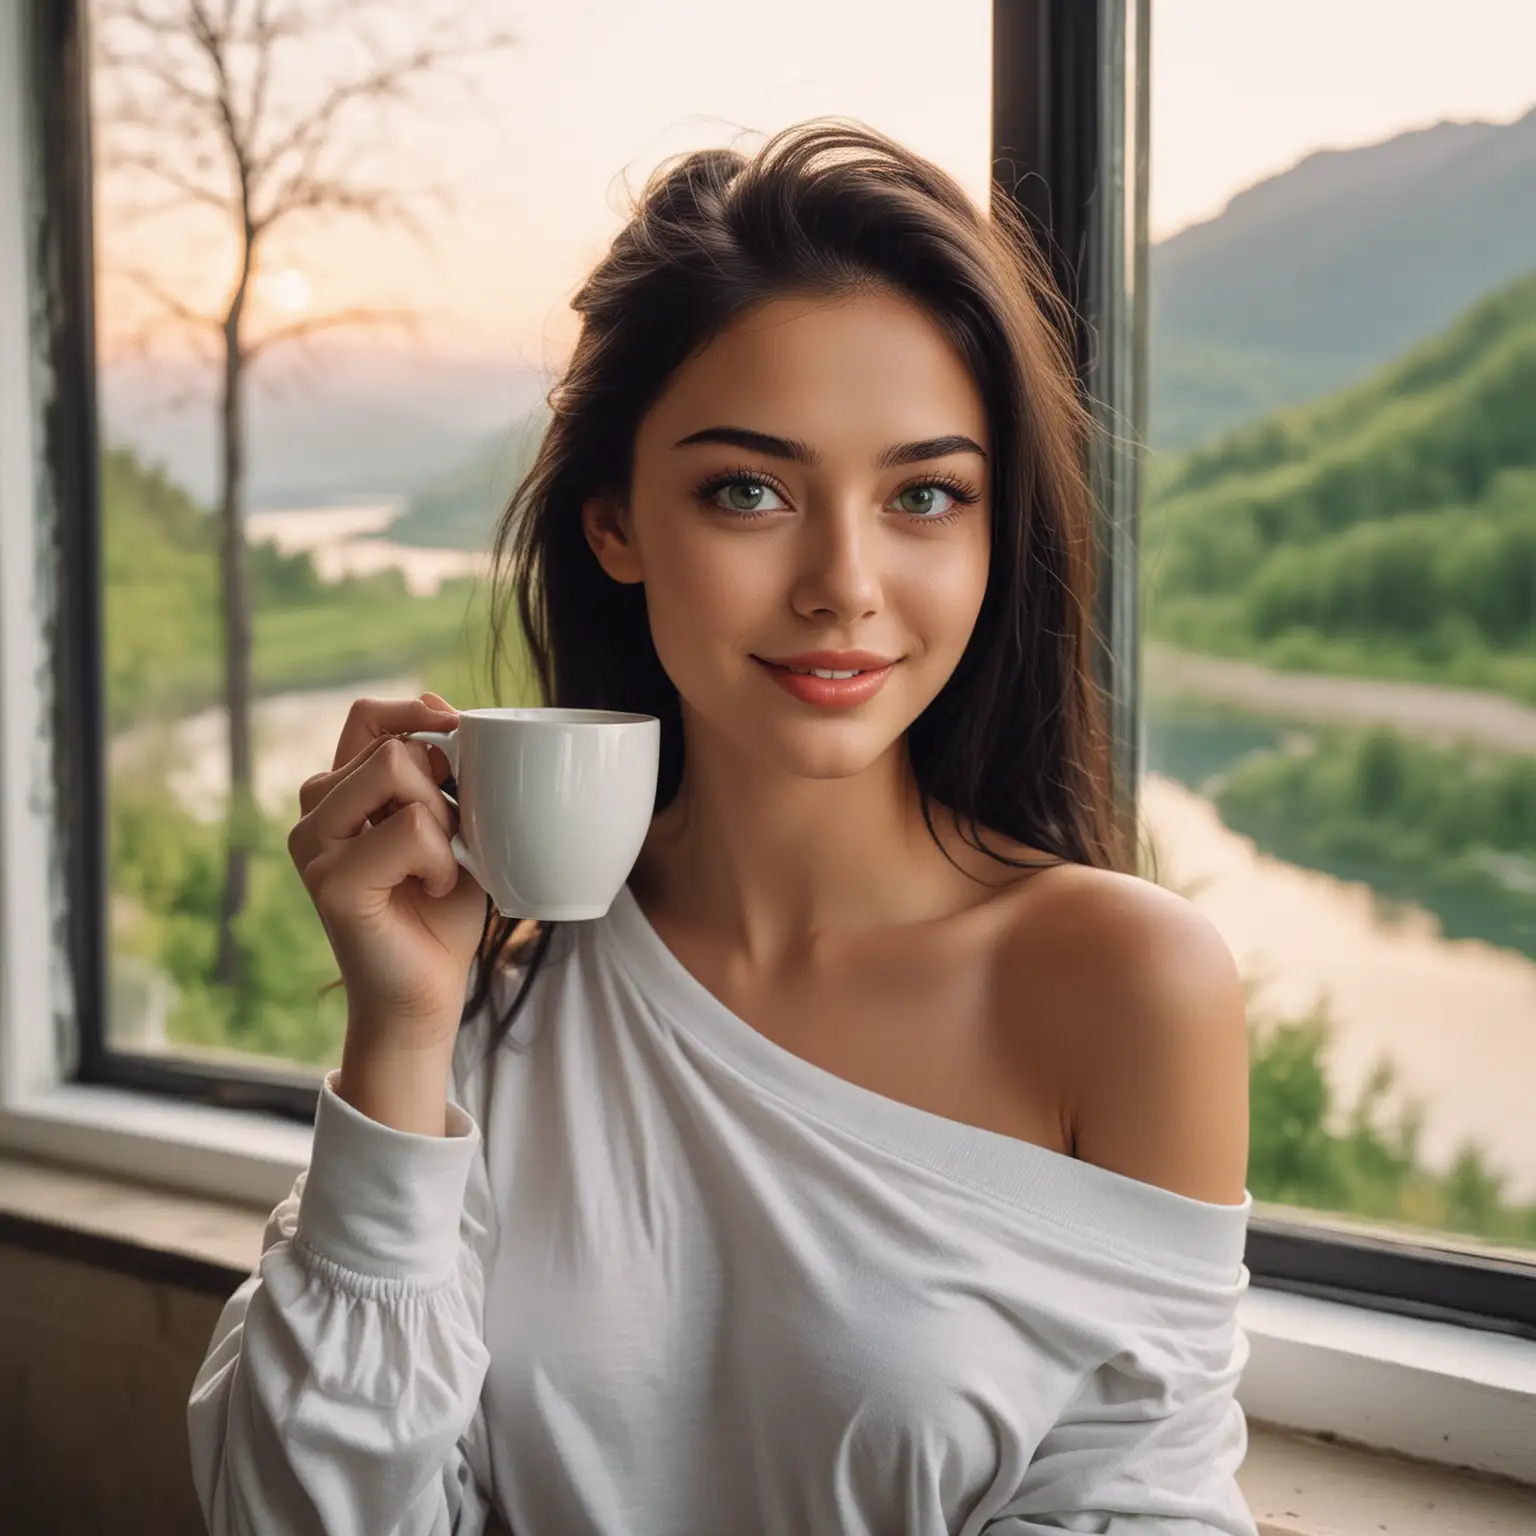 Radiant Woman Enjoying Coffee by Sunrise Window View